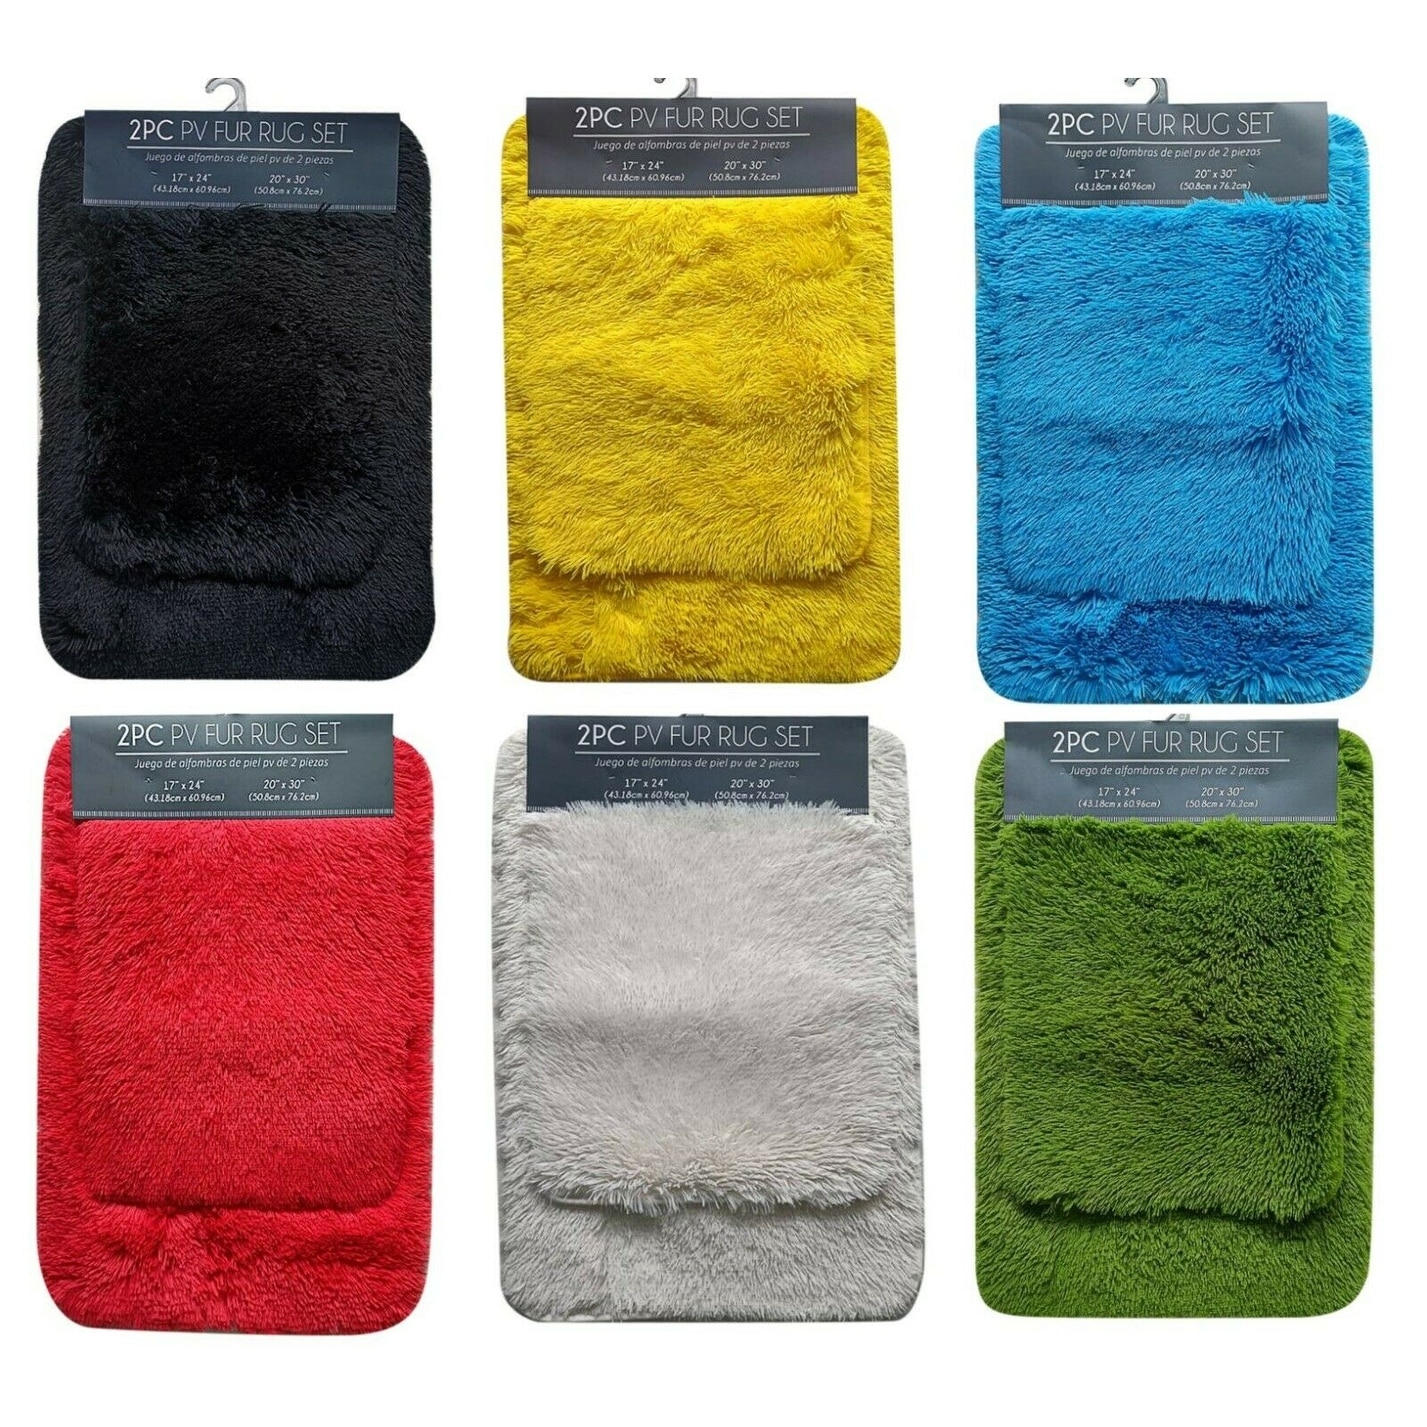 https://ak1.ostkcdn.com/images/products/is/images/direct/61e19fb7083f30ed7e0f0b7e50f26990c52f5845/PV-Fur-Rug-Soft-Furry-Shag-Plush-Non-Slip-Bathroom-Floor-Carpet%2C-2-Pc-Bath-Mat-Set-17%22-x-24%22-%26-20%22-x-30%22-Solid-Color.jpg